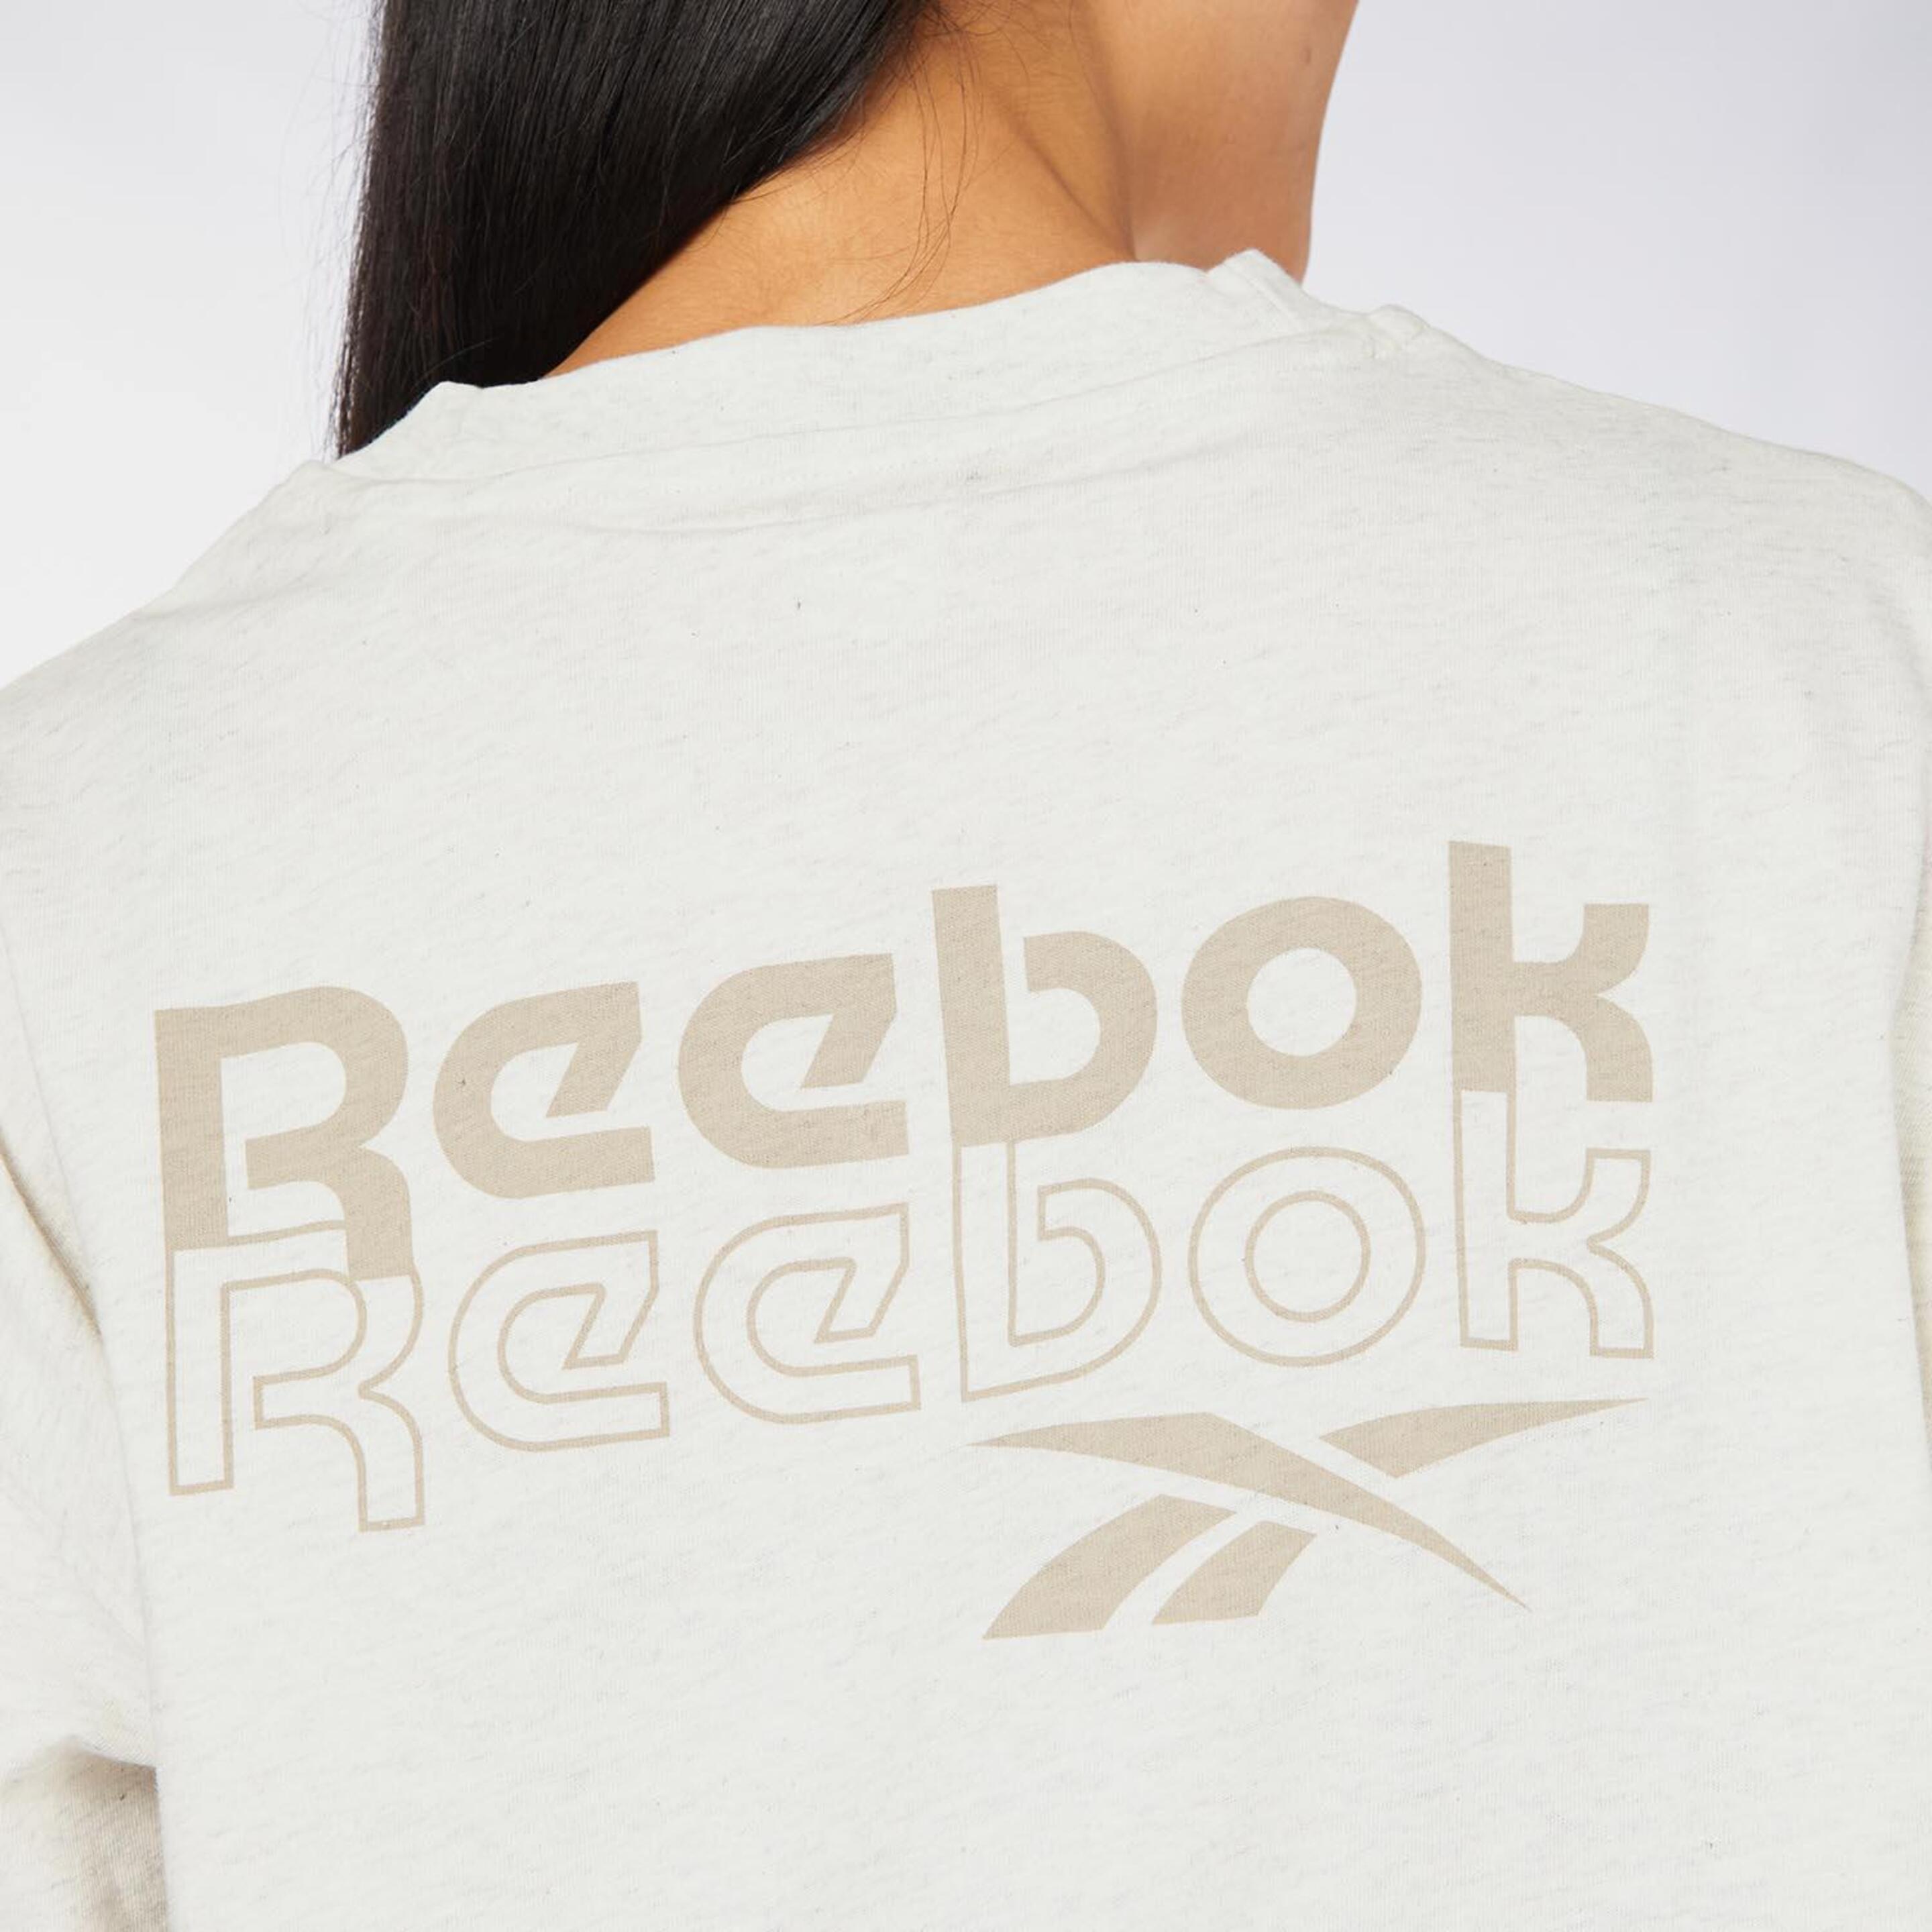 Reebok Rie - Arena - Camiseta Mujer